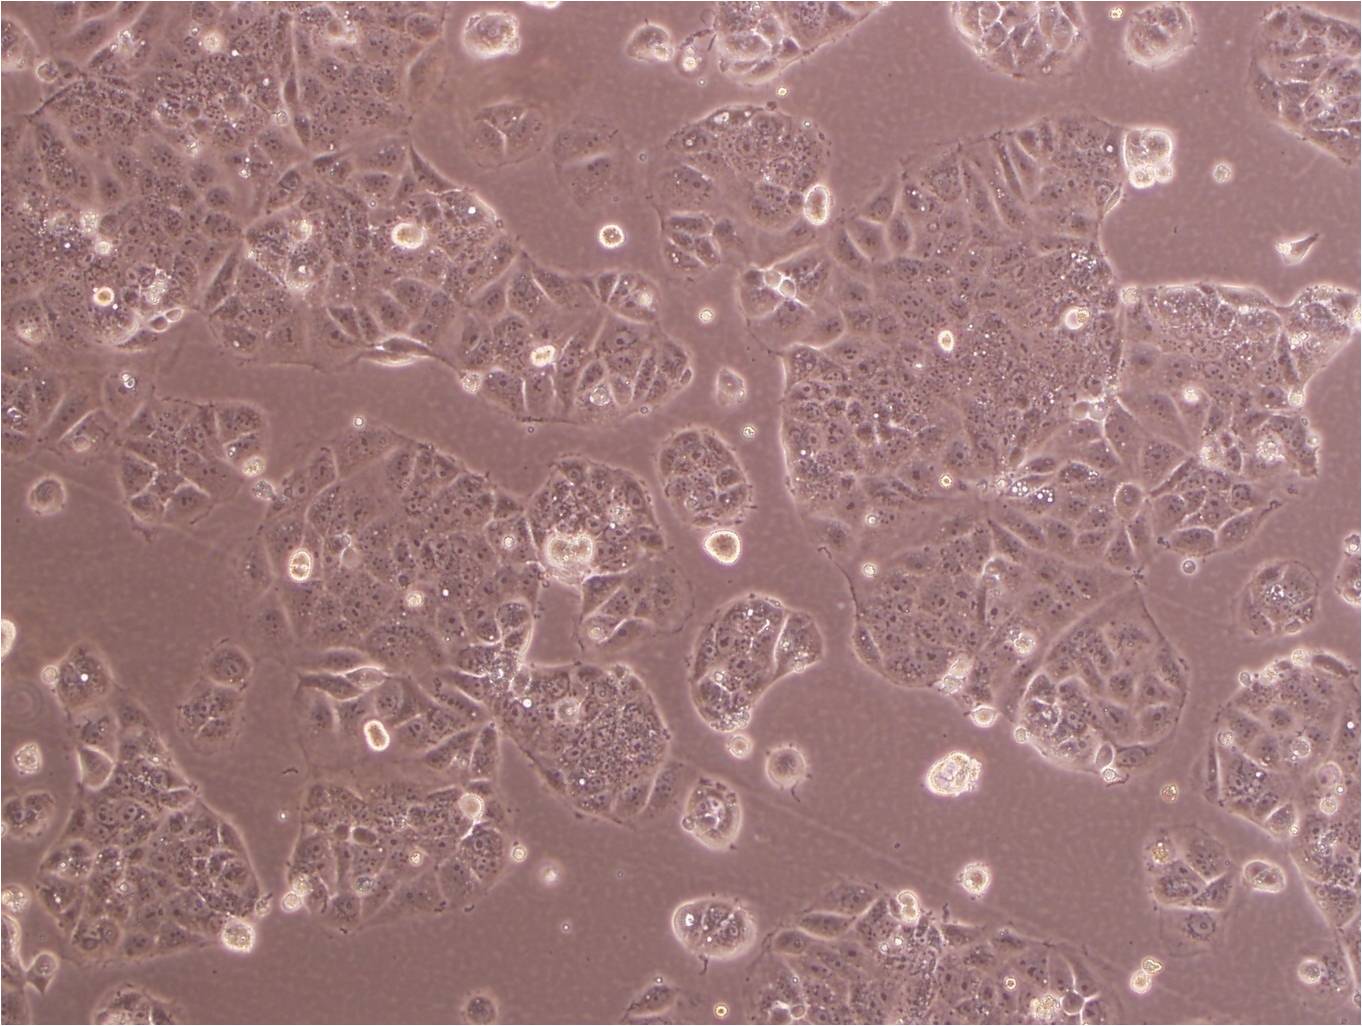 SK-N-MC Cells|人神经上皮瘤克隆细胞(包送STR鉴定报告)